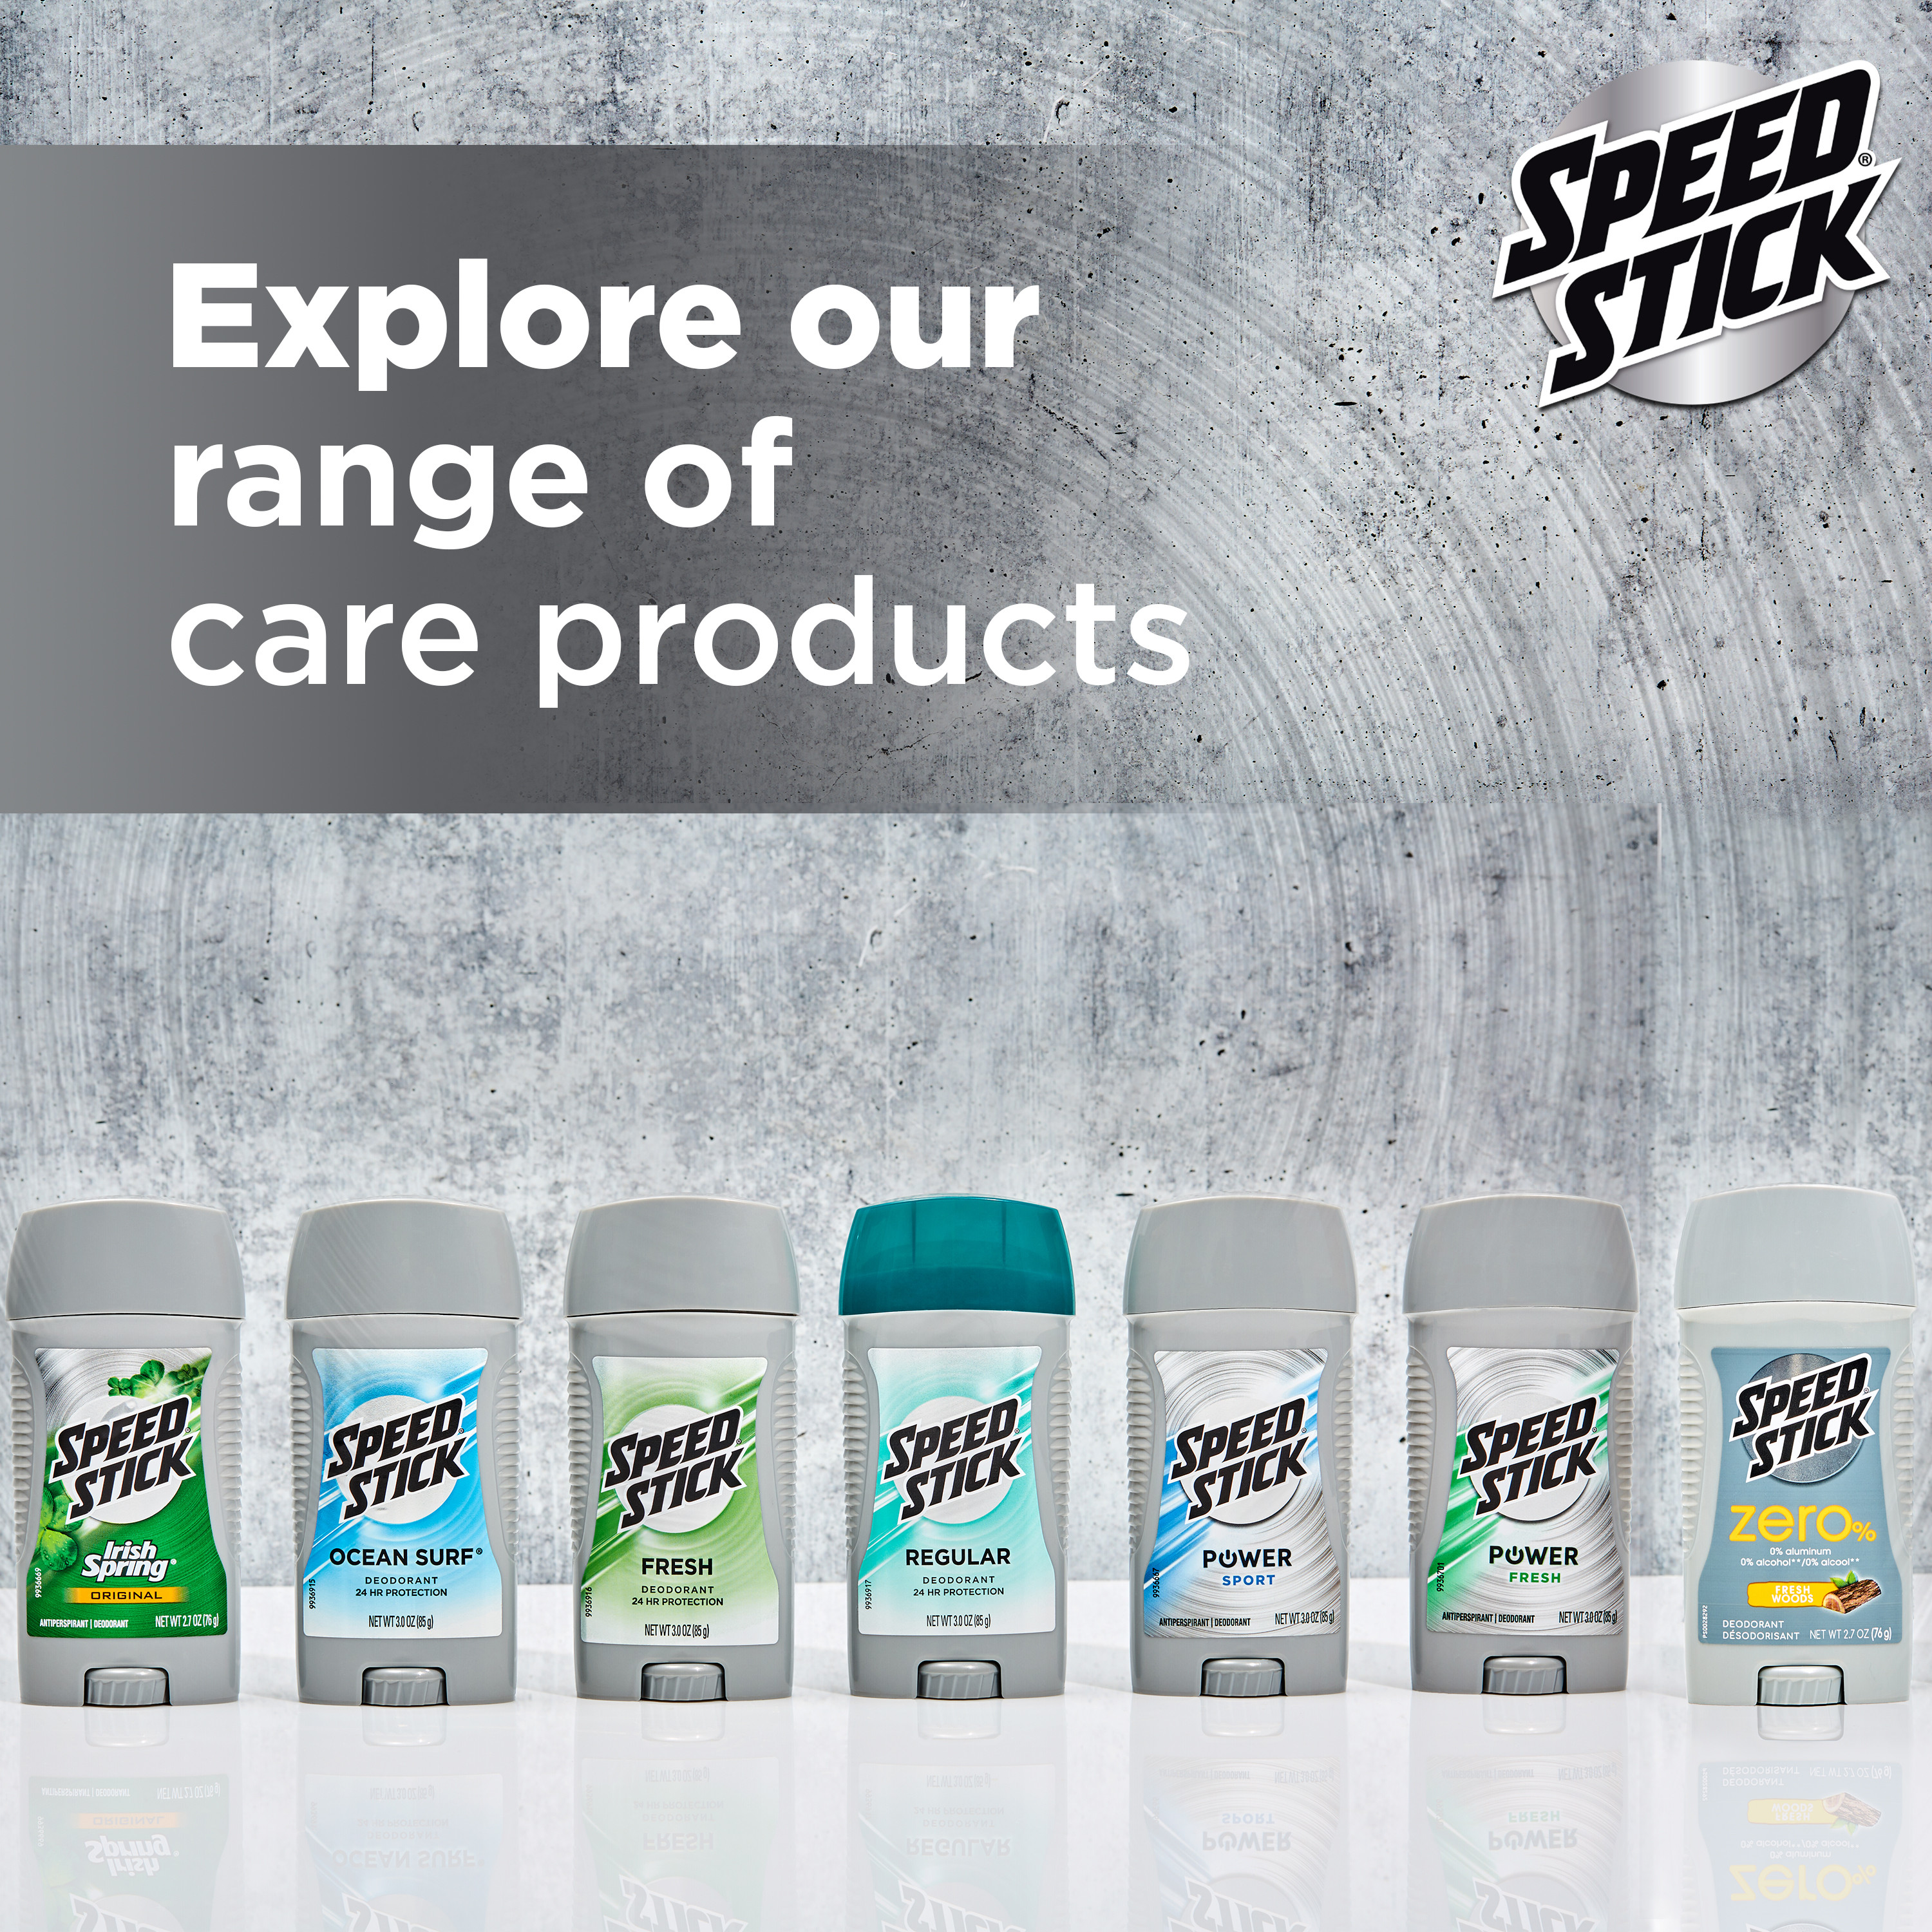 Speed Stick Deodorant for Men, Regular - 3 ounce (4 Pack) - image 11 of 17